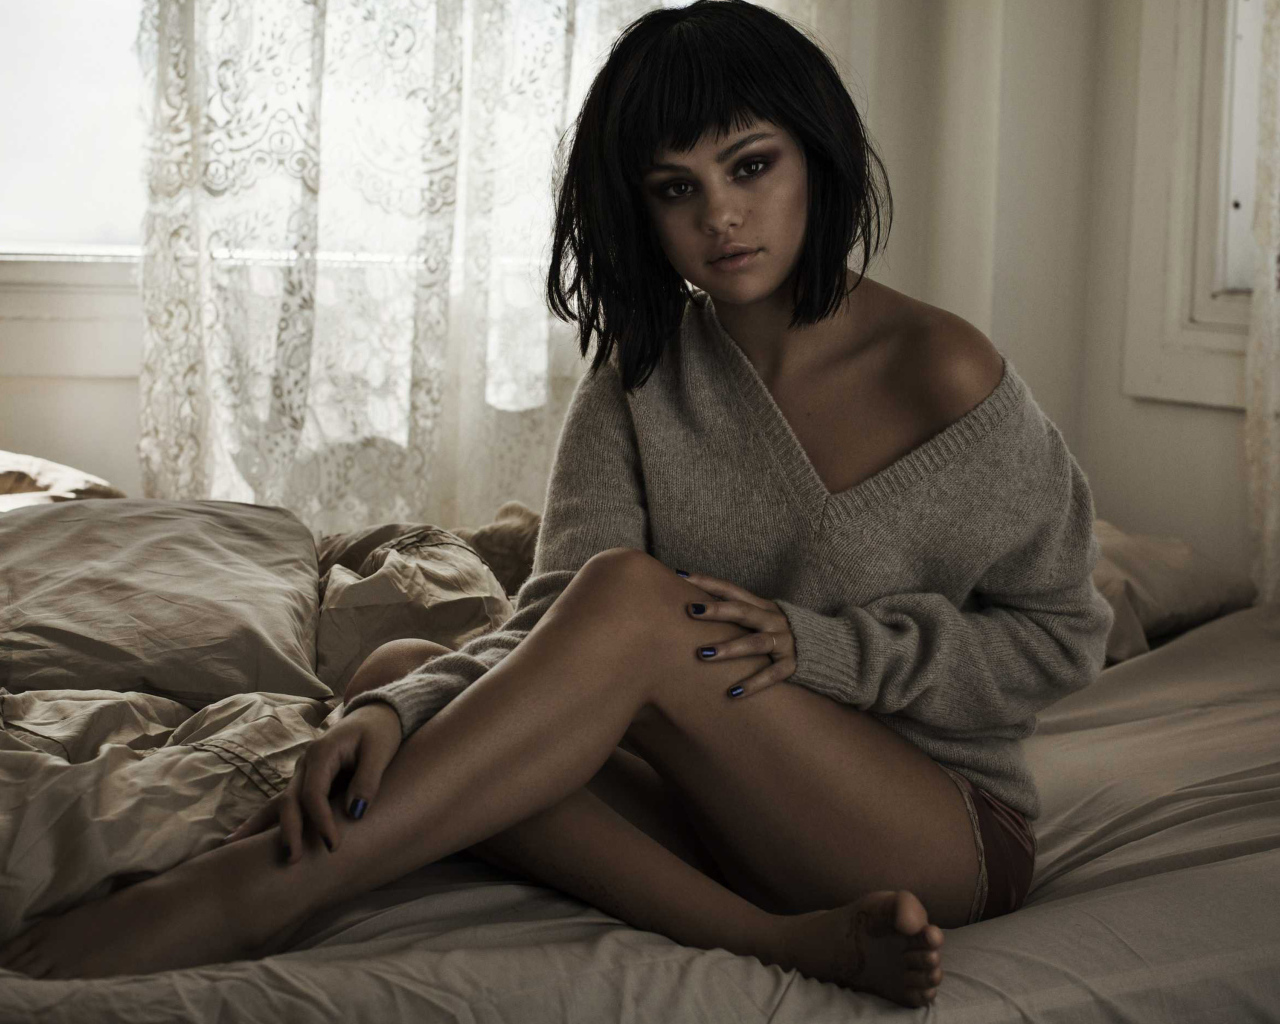 Певица Селена Гомес сидит в свитере на кровати